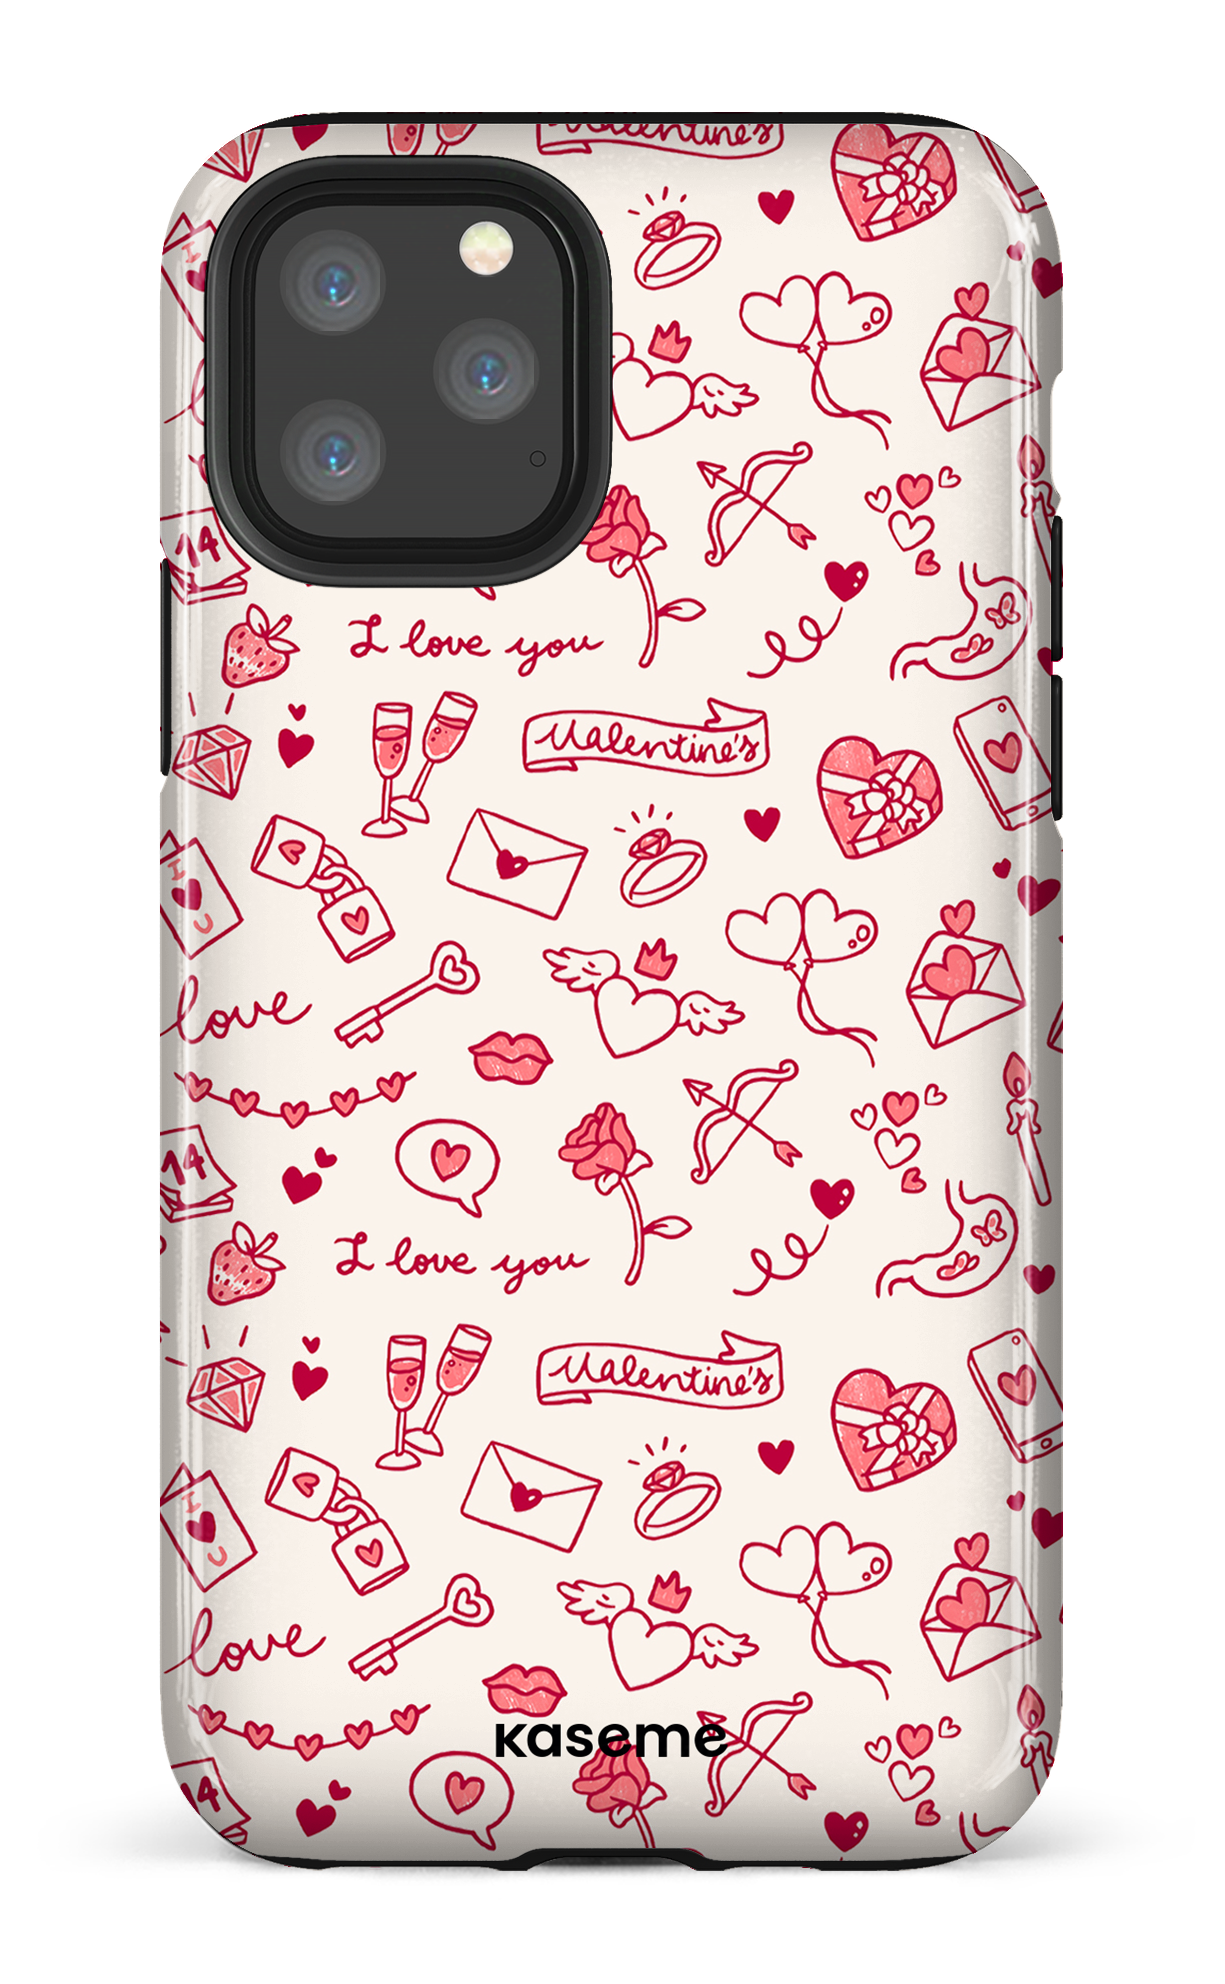 My Valentine - iPhone 11 Pro